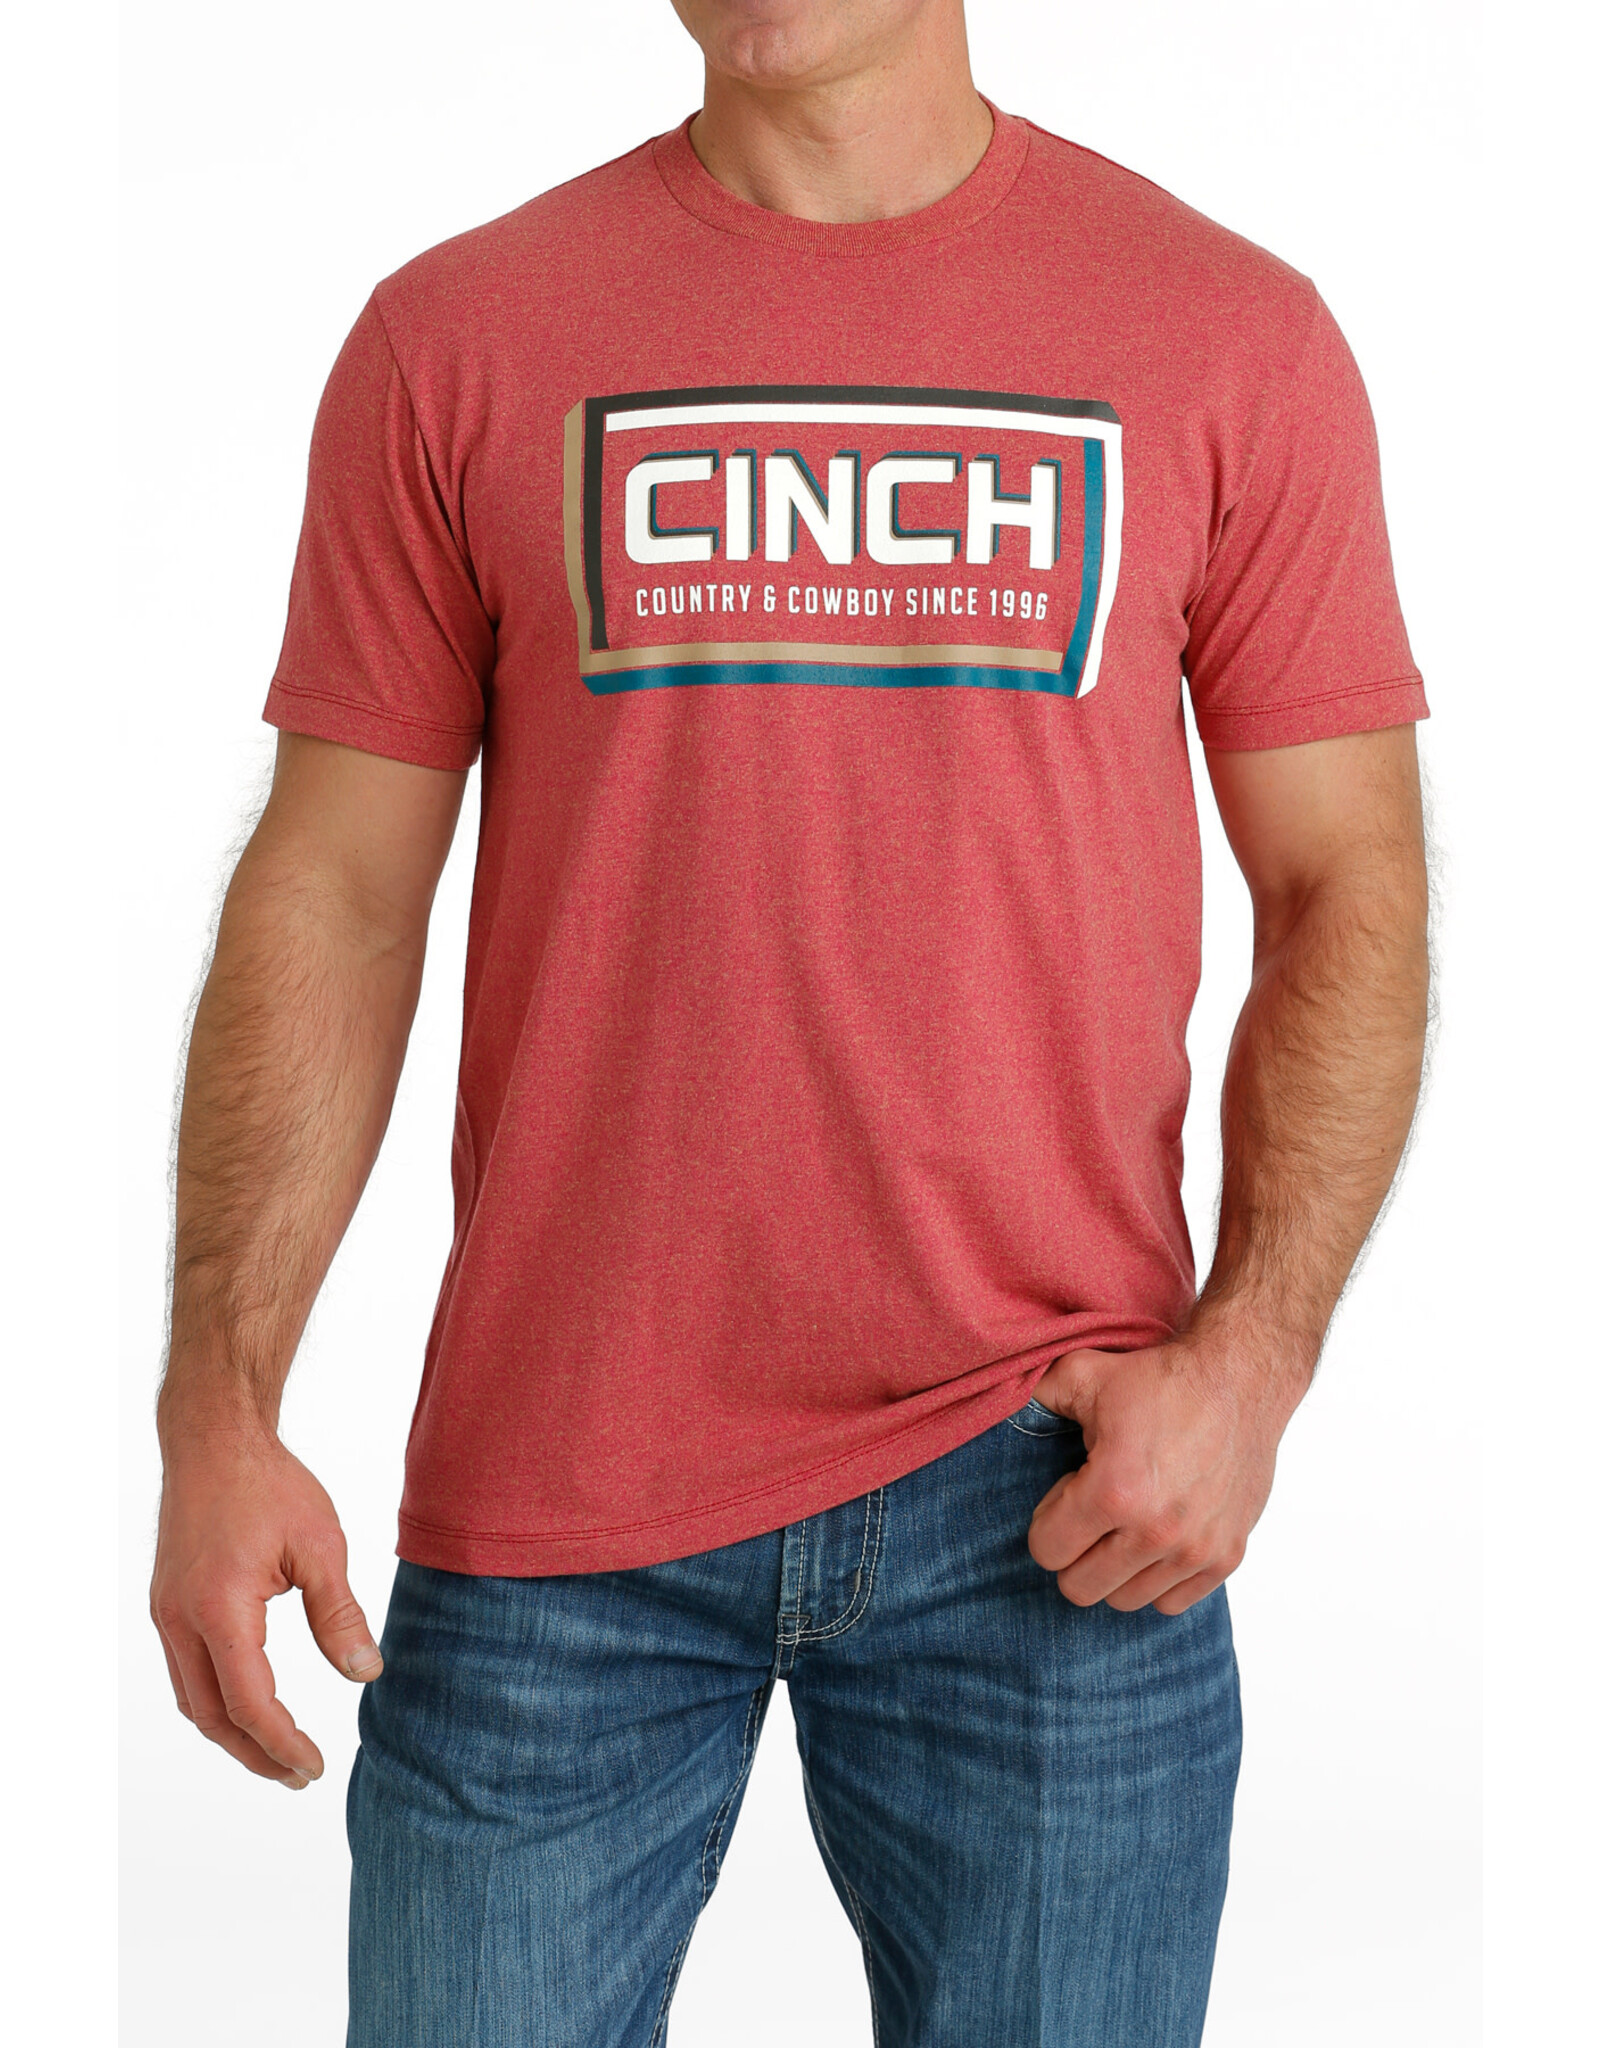 Cinch Mens Logo MTT1690592 RED Graphic Tee